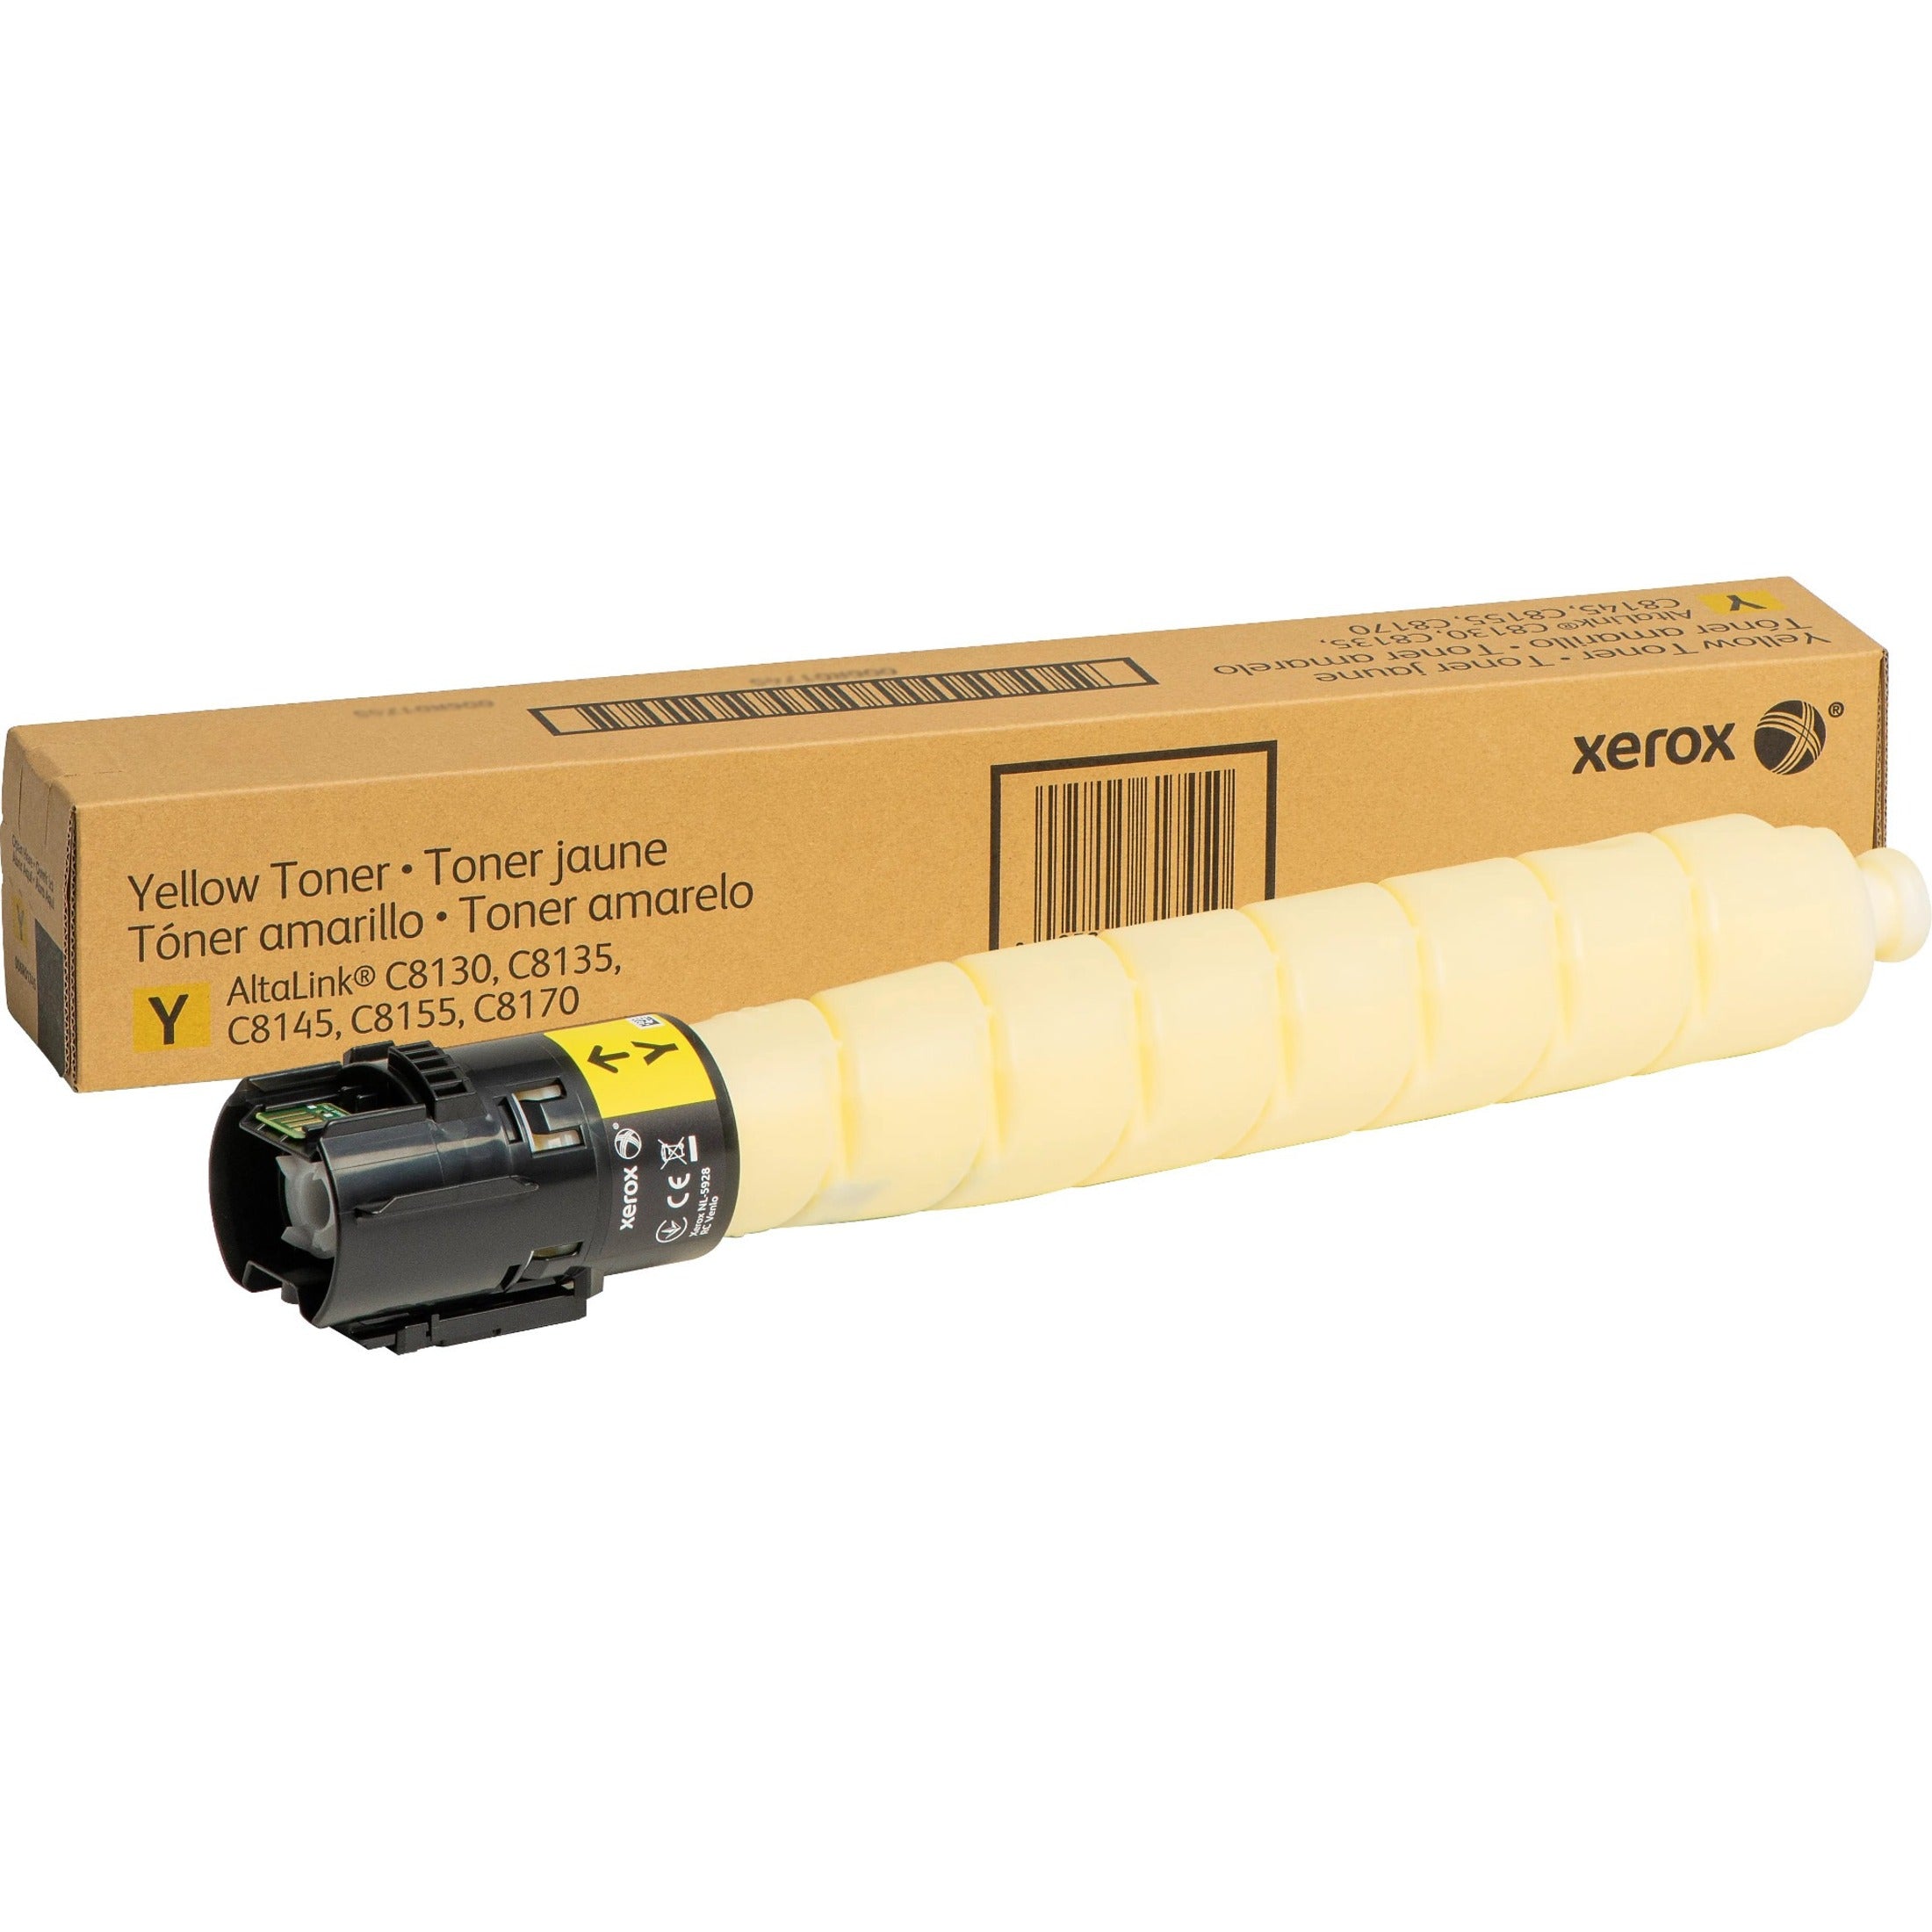 Xerox 006R01749 AltaLink C8130/35/45/55/70 Yellow Toner Cartridge, Original Laser Toner with 28000 Pages Yield